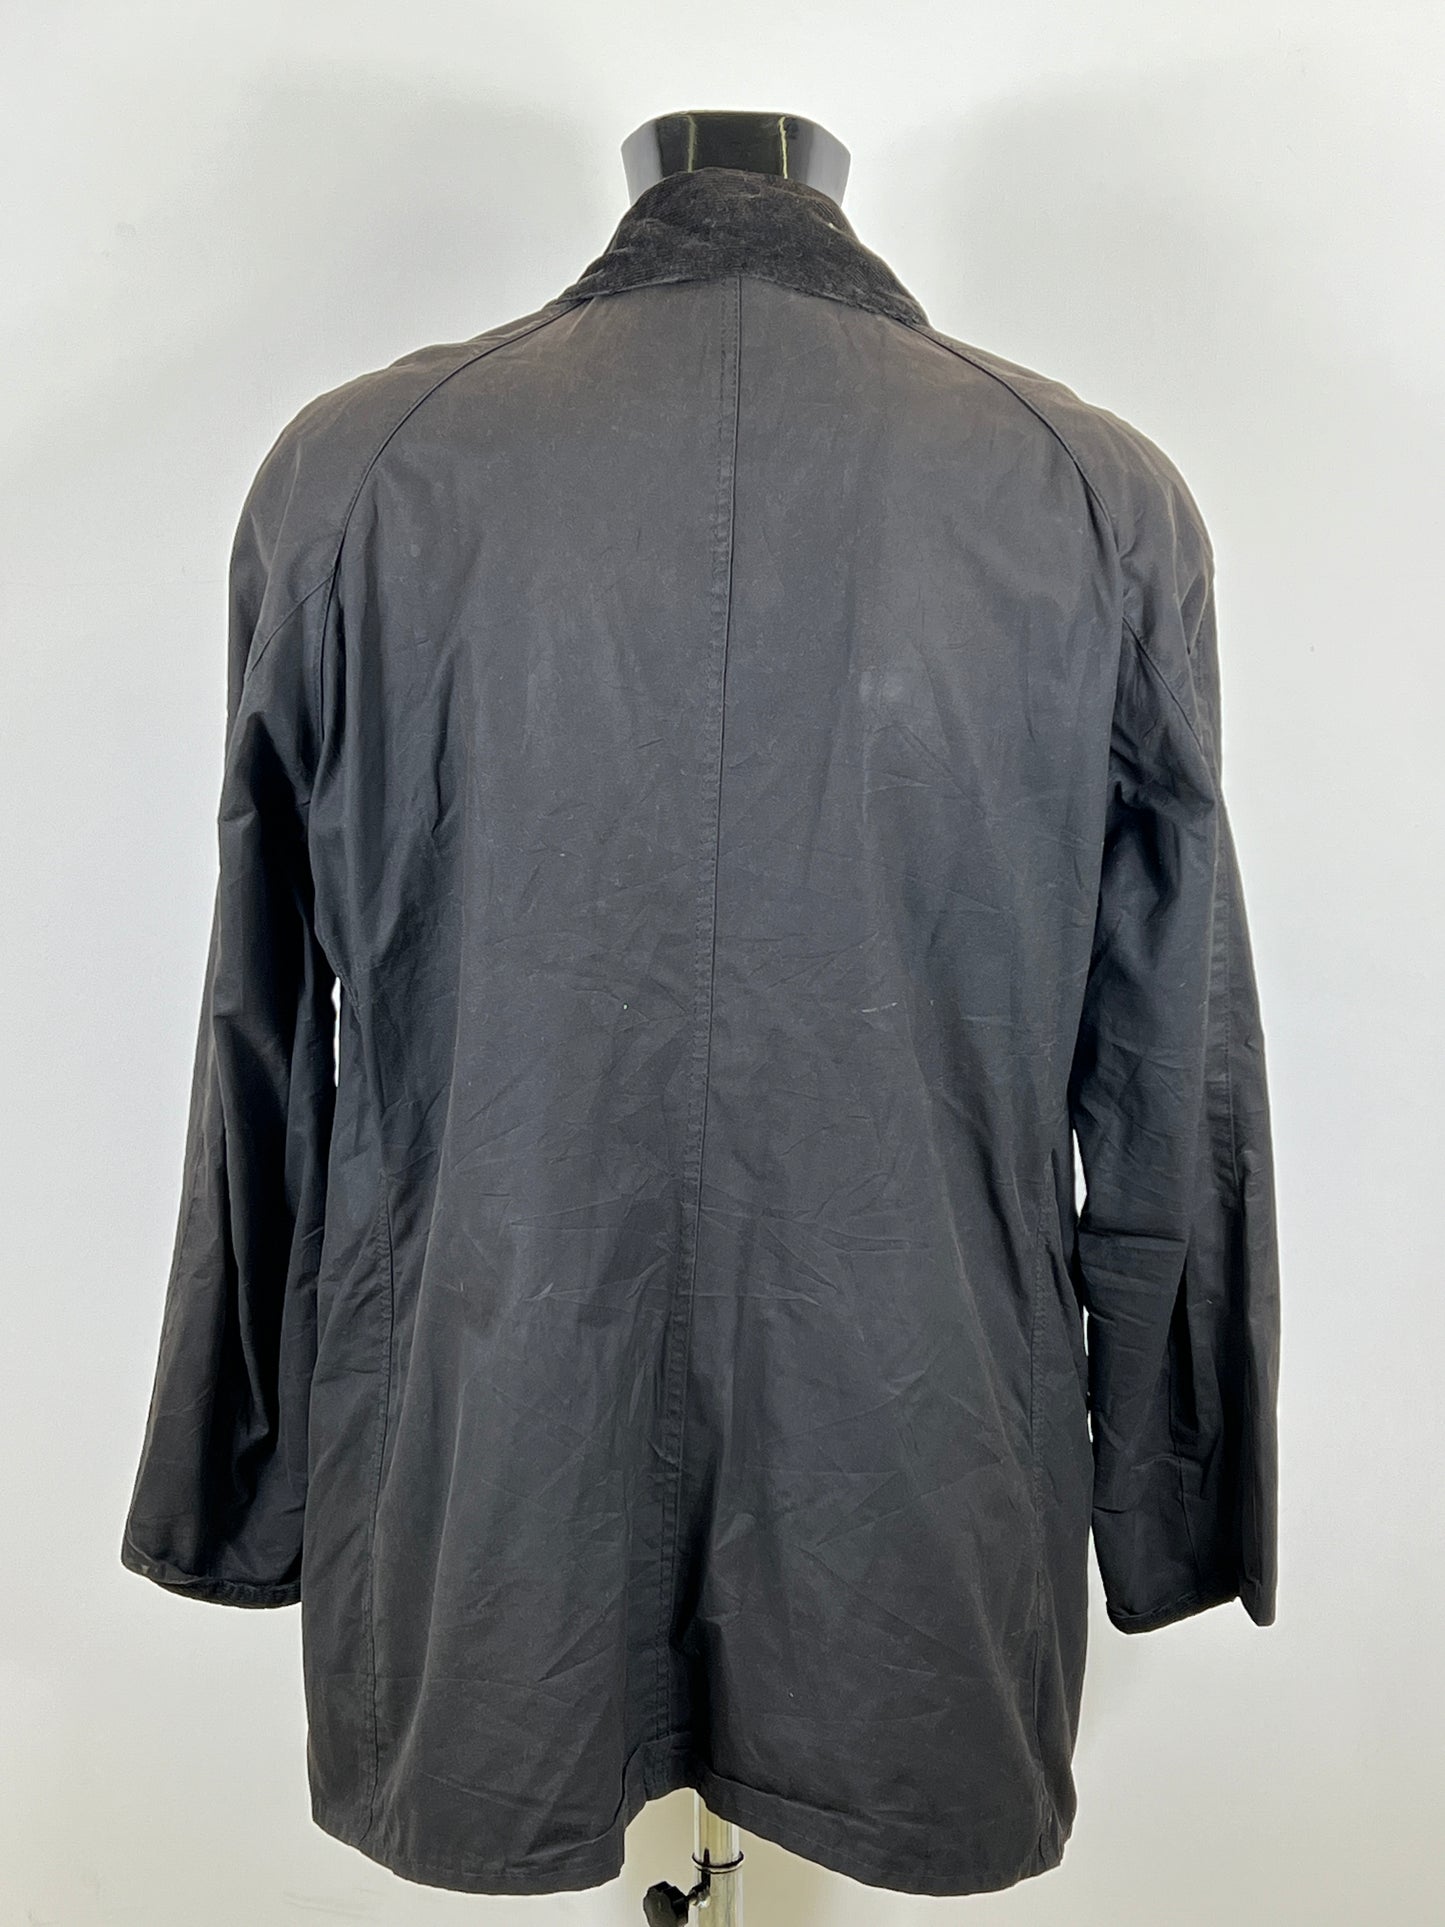 Giacca Barbour uomo cerato Bristol nero XLarge - Man Black Bristol wax Jacket size XL